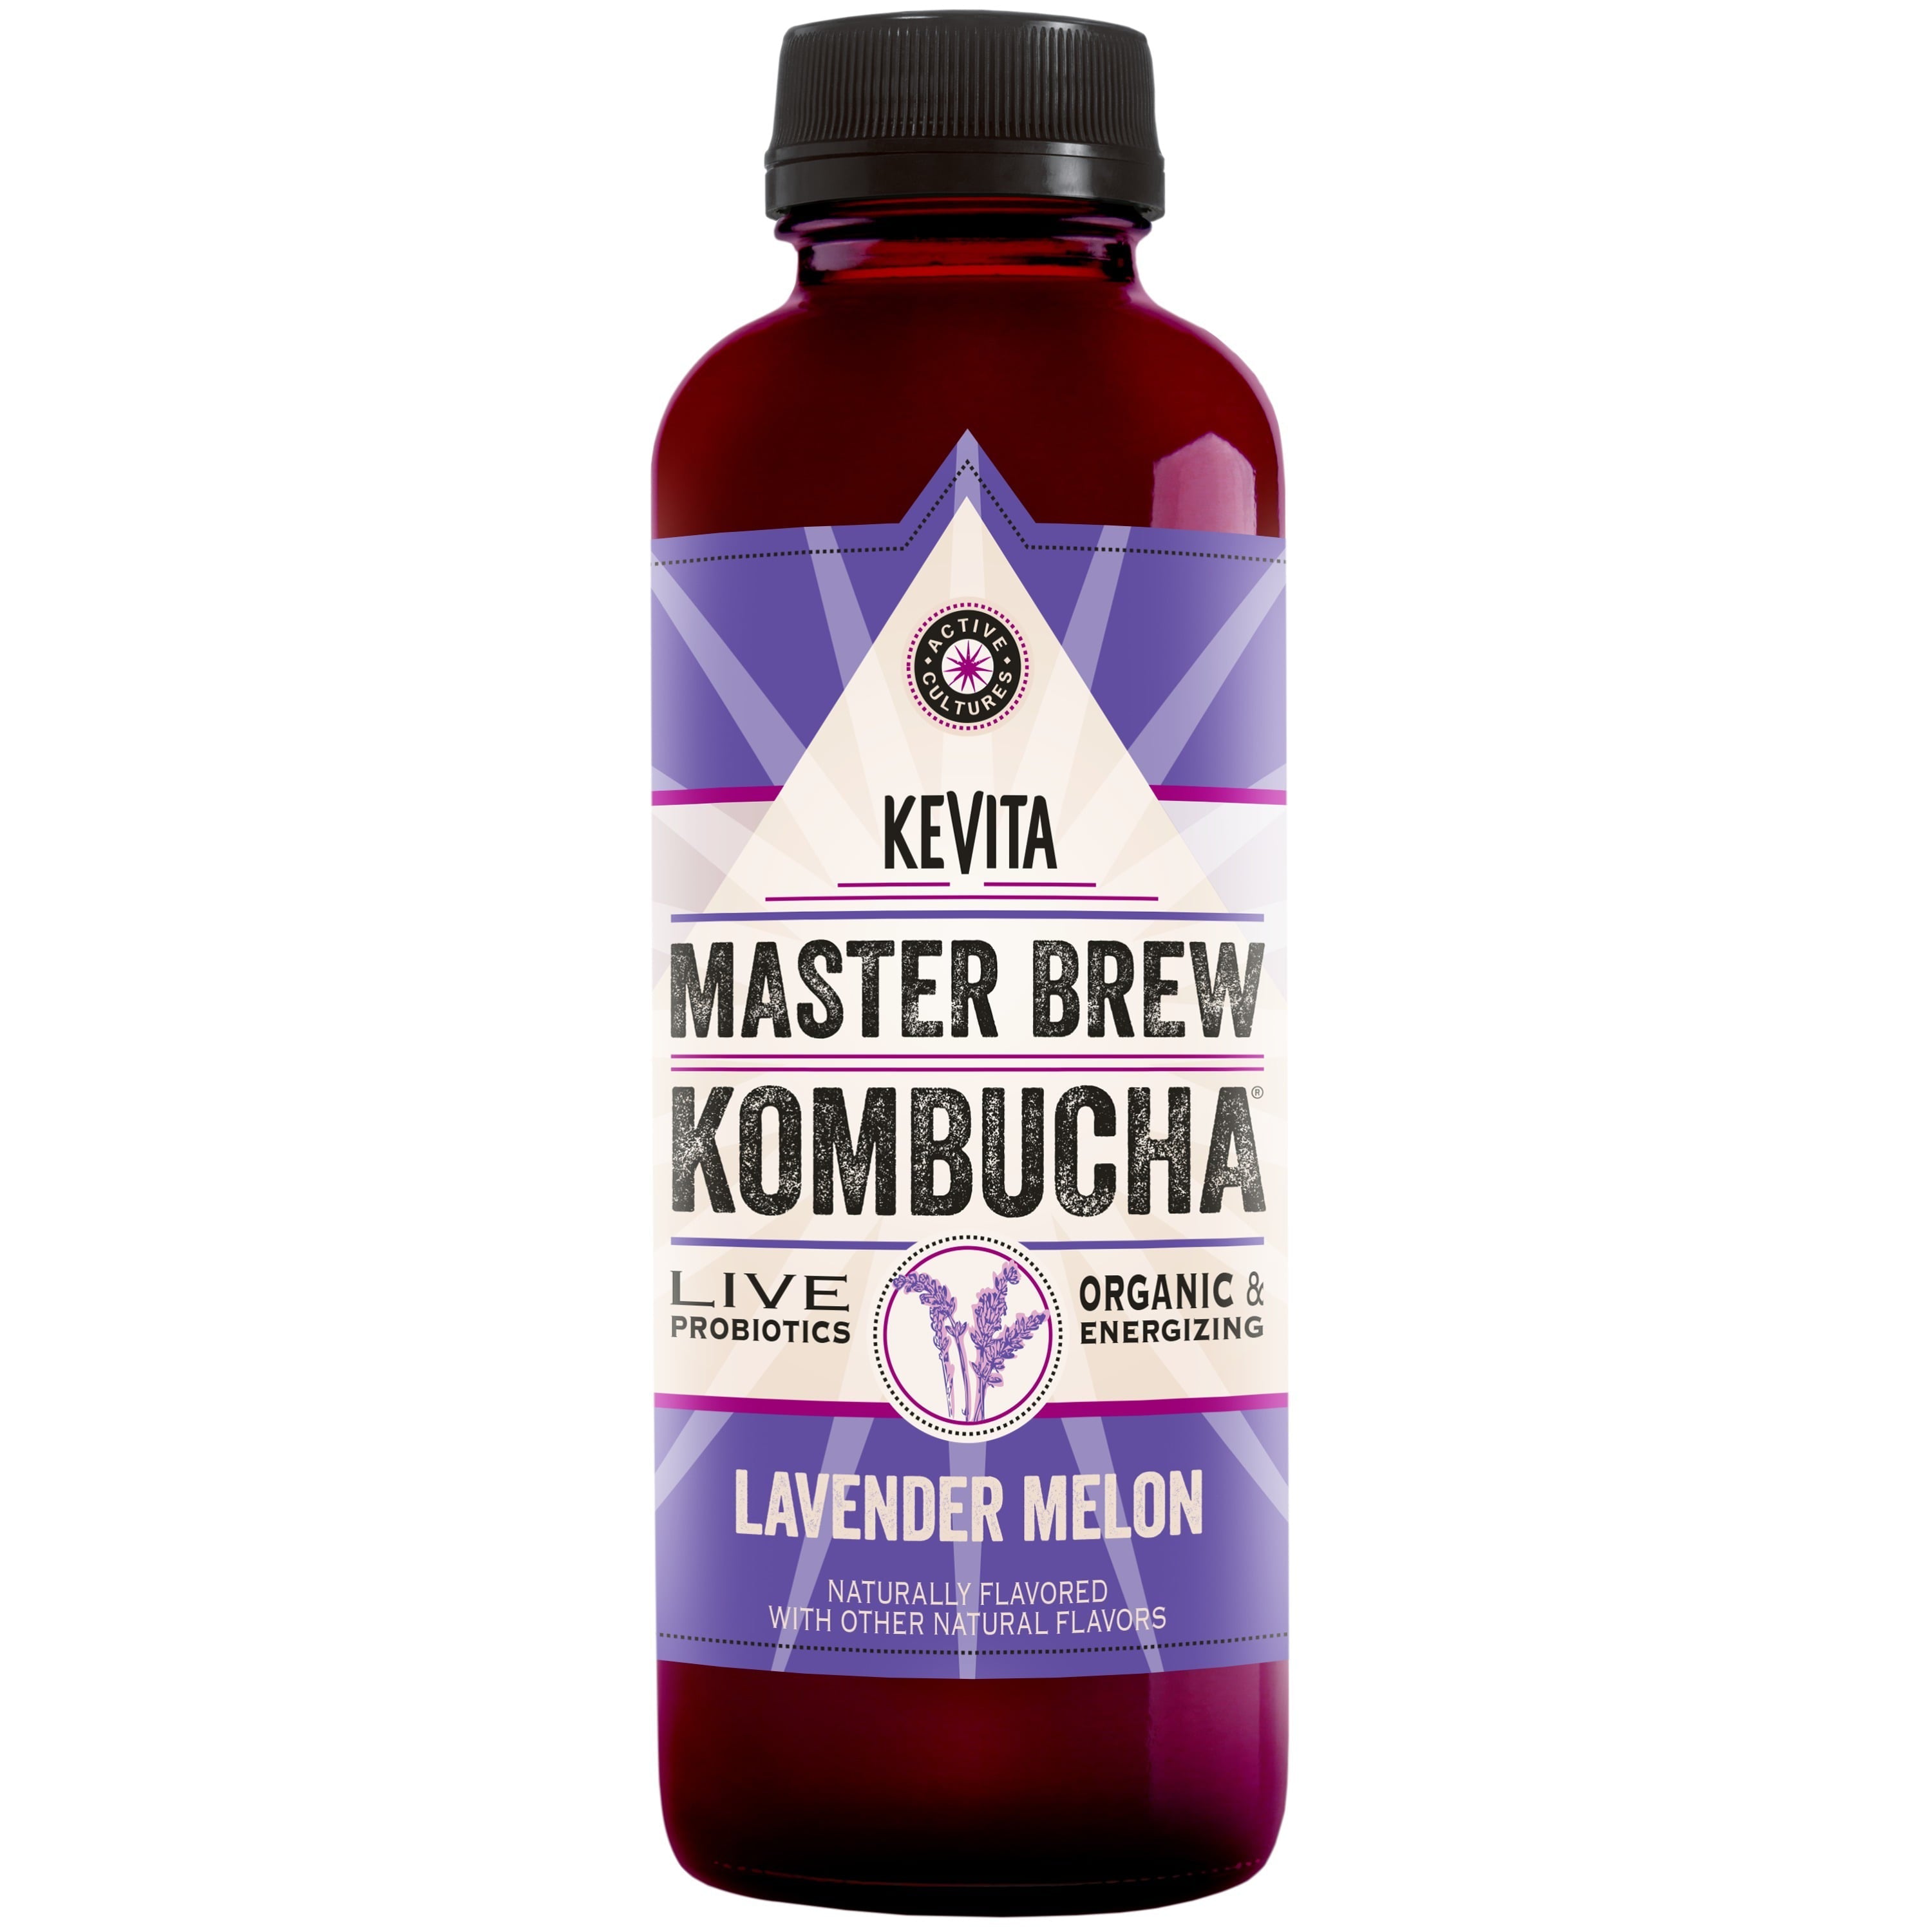 KeVita Kombucha Master Brew Lavendr Melon 15.2 Fl. Oz.